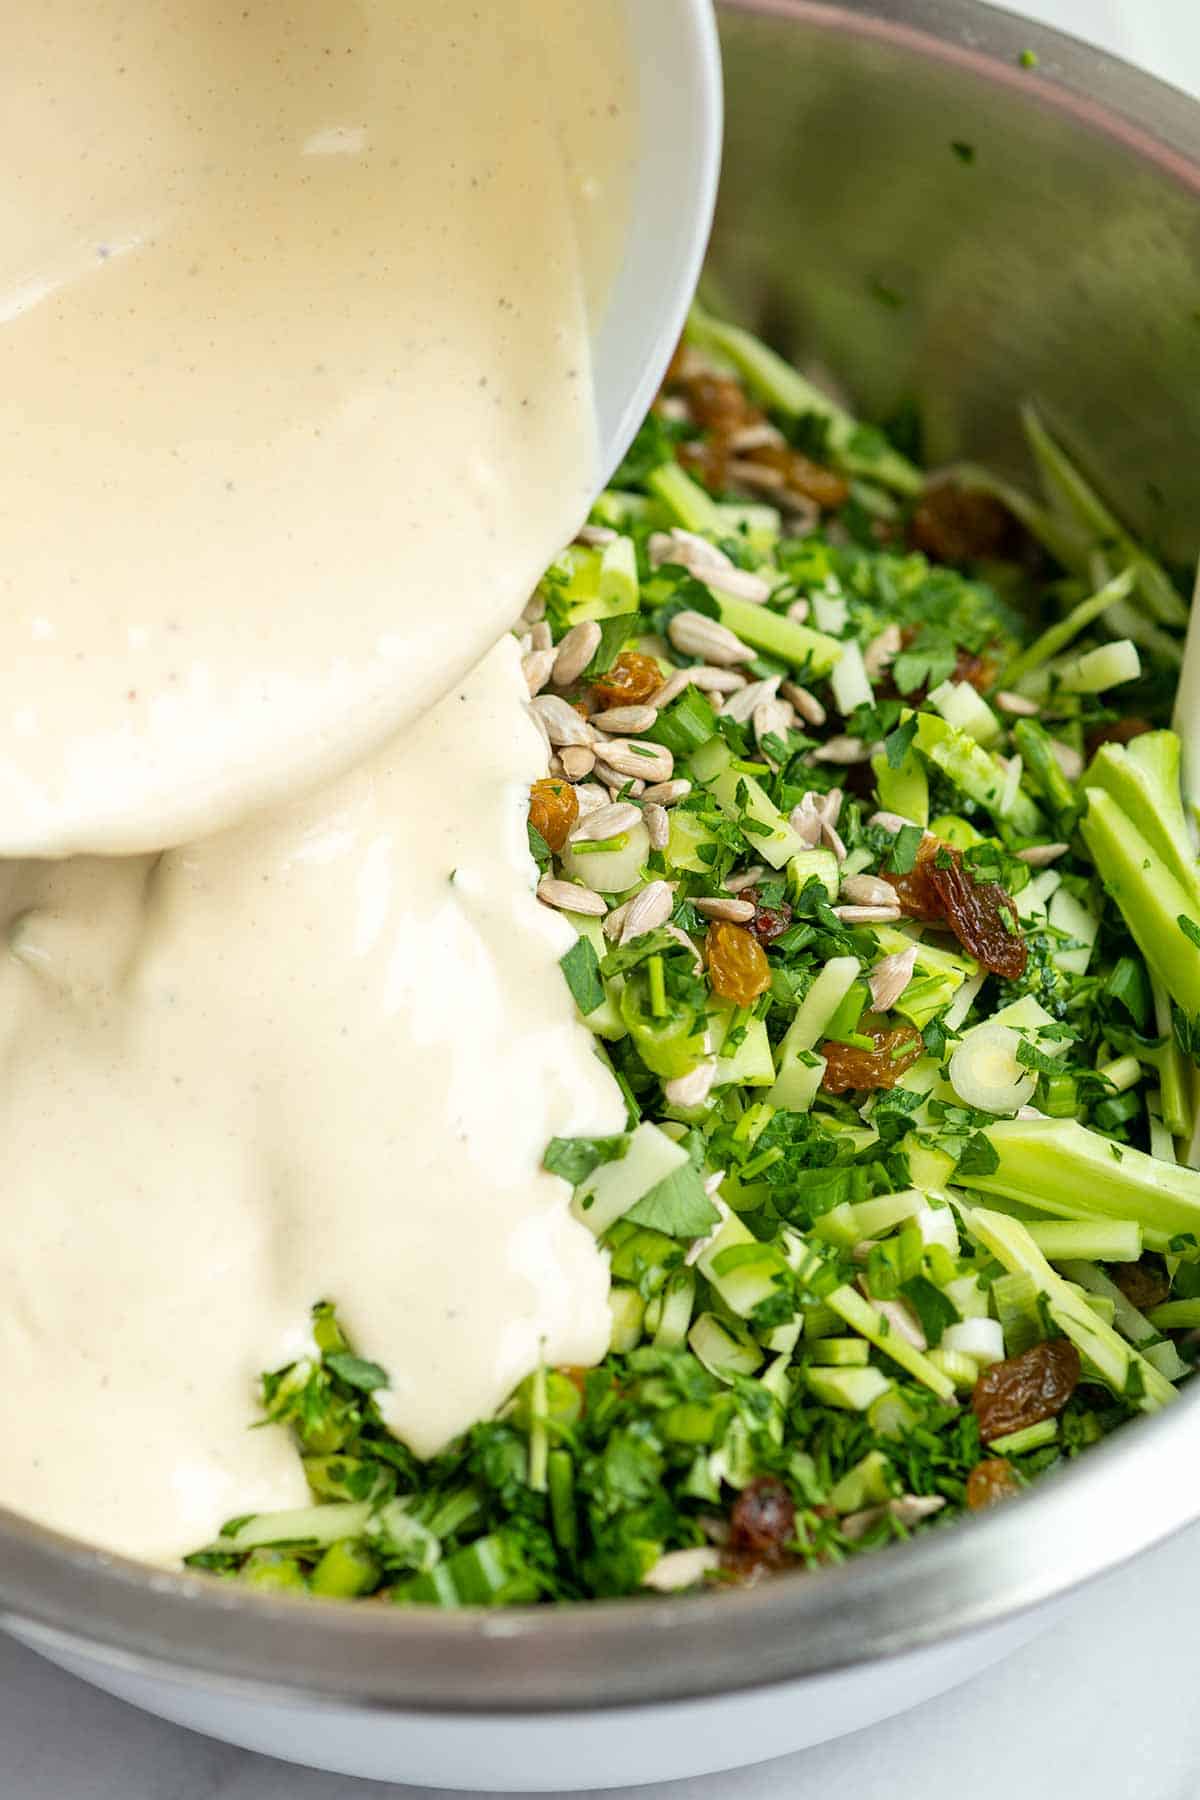 Adding a creamy dressing to broccoli slaw ingredients